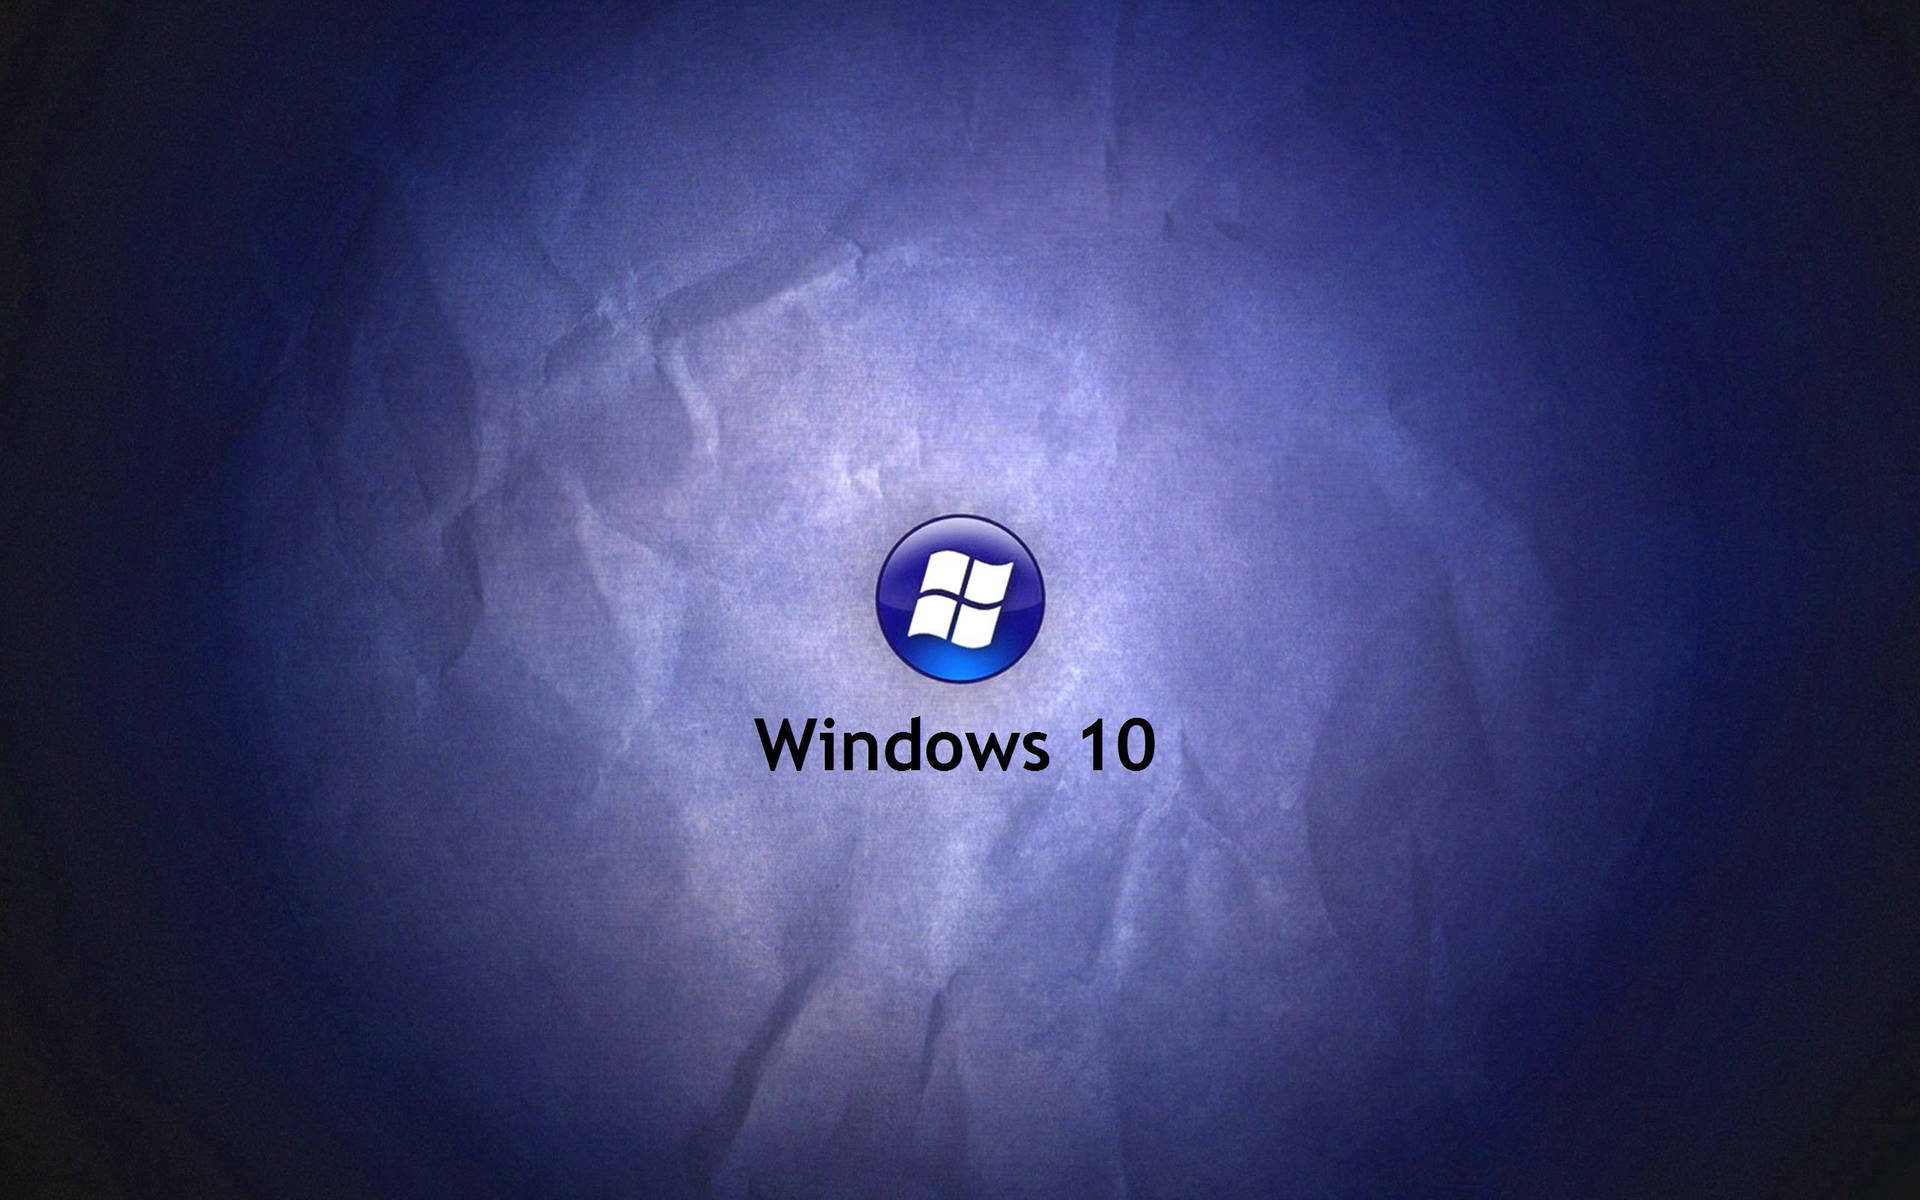 Windows 10 Hd Violet Paper